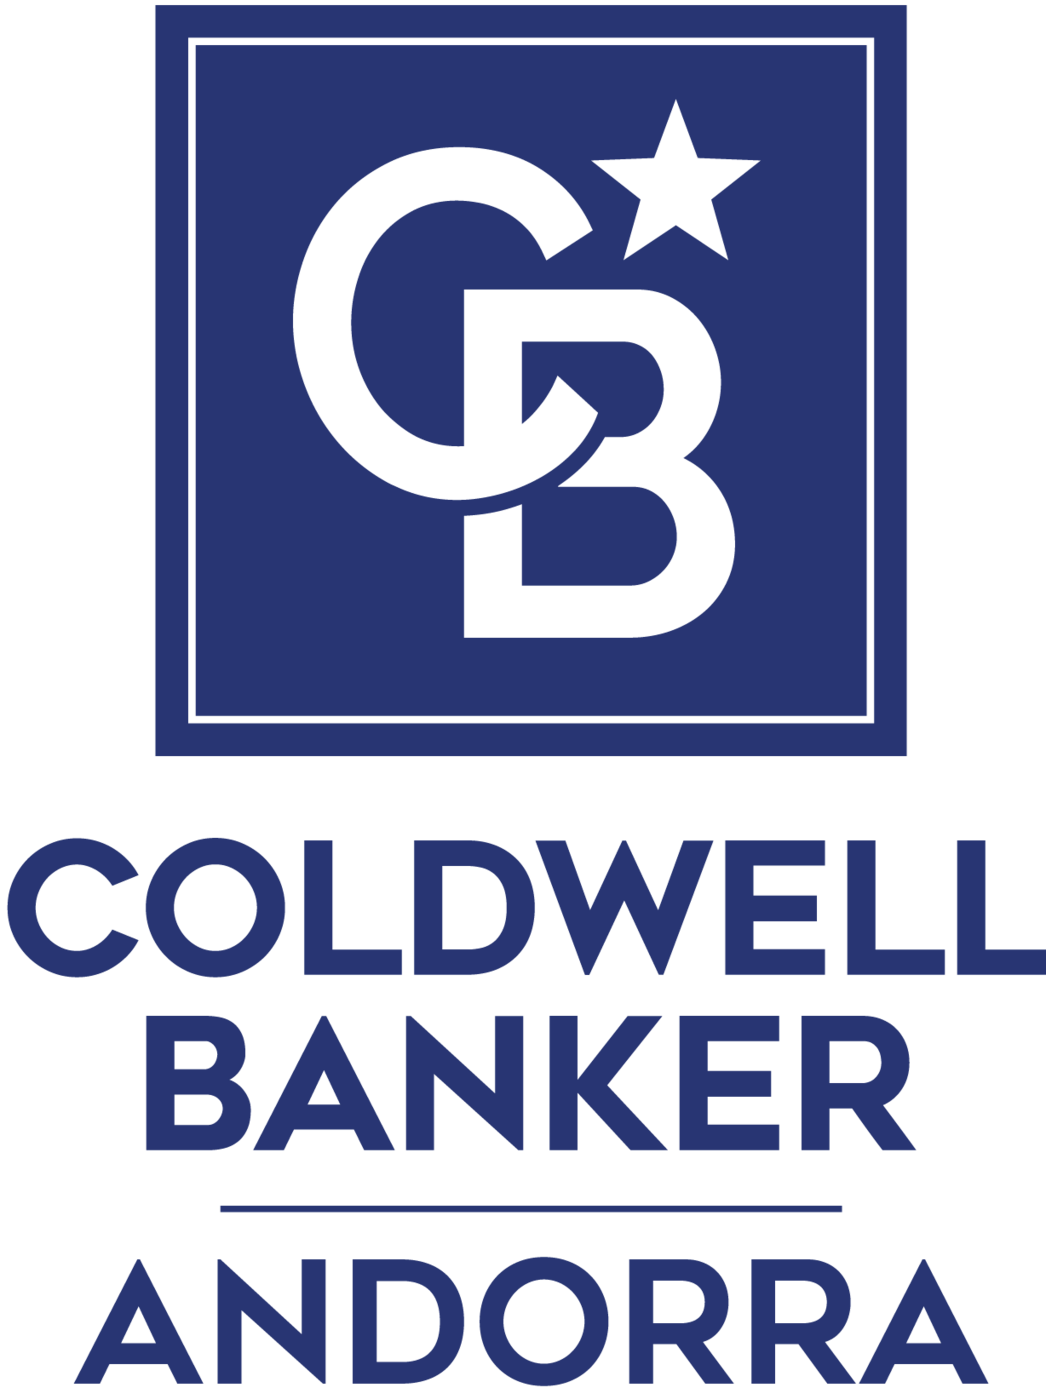 Coldwell Banker Andorra